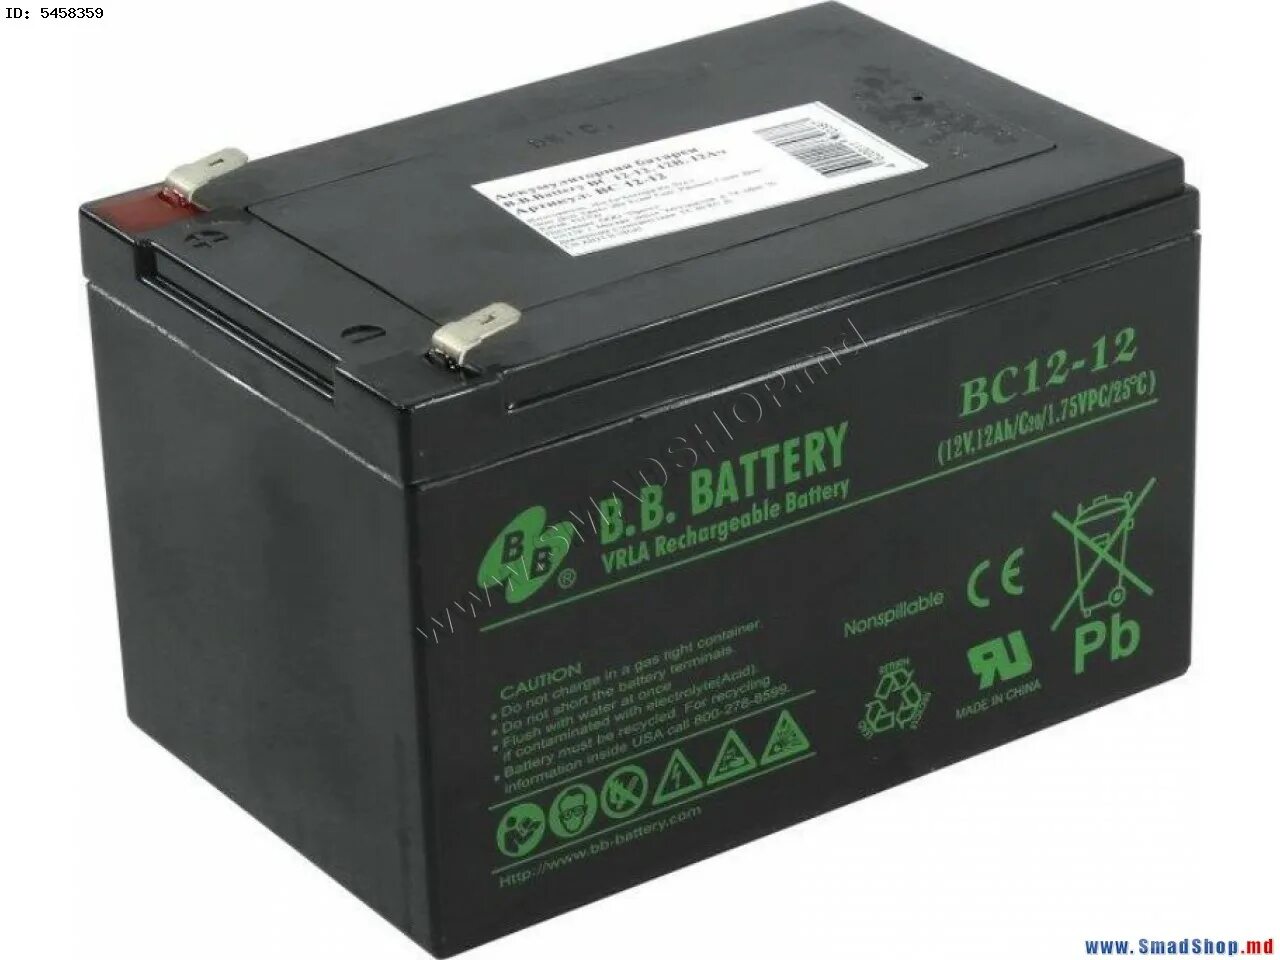 B b battery 12 12. Батарея для ups 12v 5ah. BB Battery bc12-12. Аккумулятор b.b.Battery 7.2 Ah. Аккумулятор BB Battery BC 7.2-12.